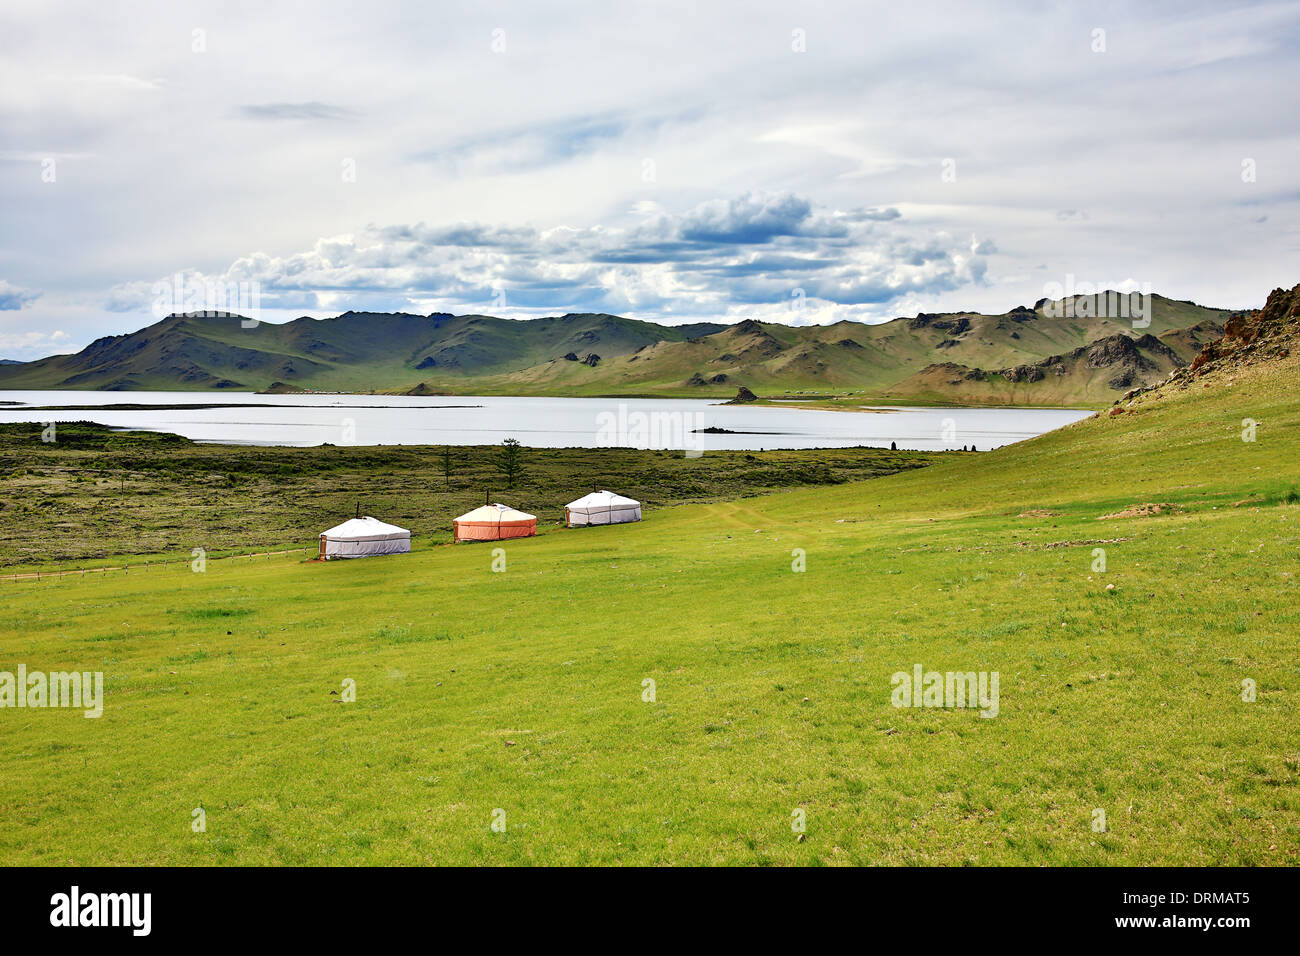 Yurt settlements, Terkhiin Tsagaan Lake, central mongolia Stock Photo